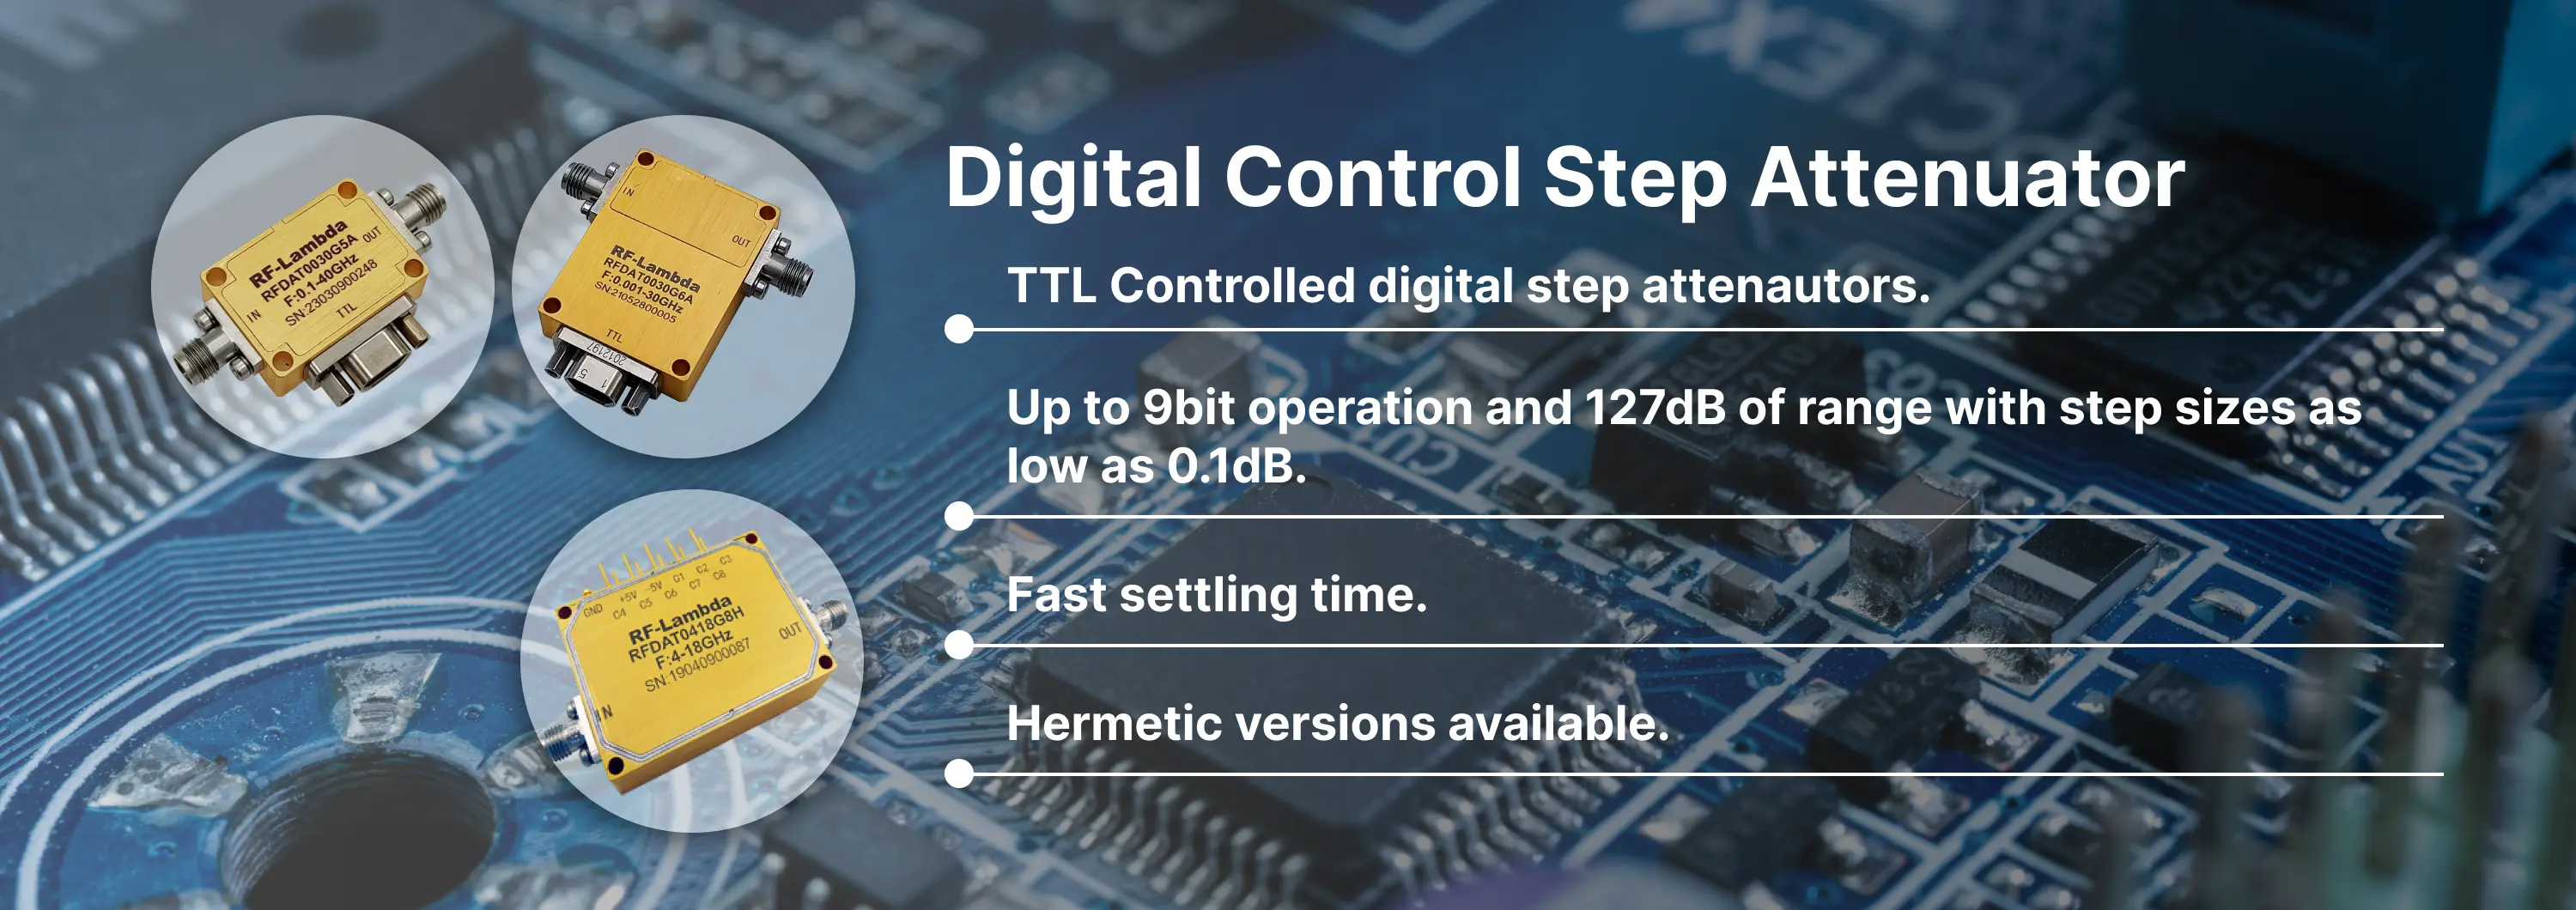 Digital Control Step Attenuator Banner